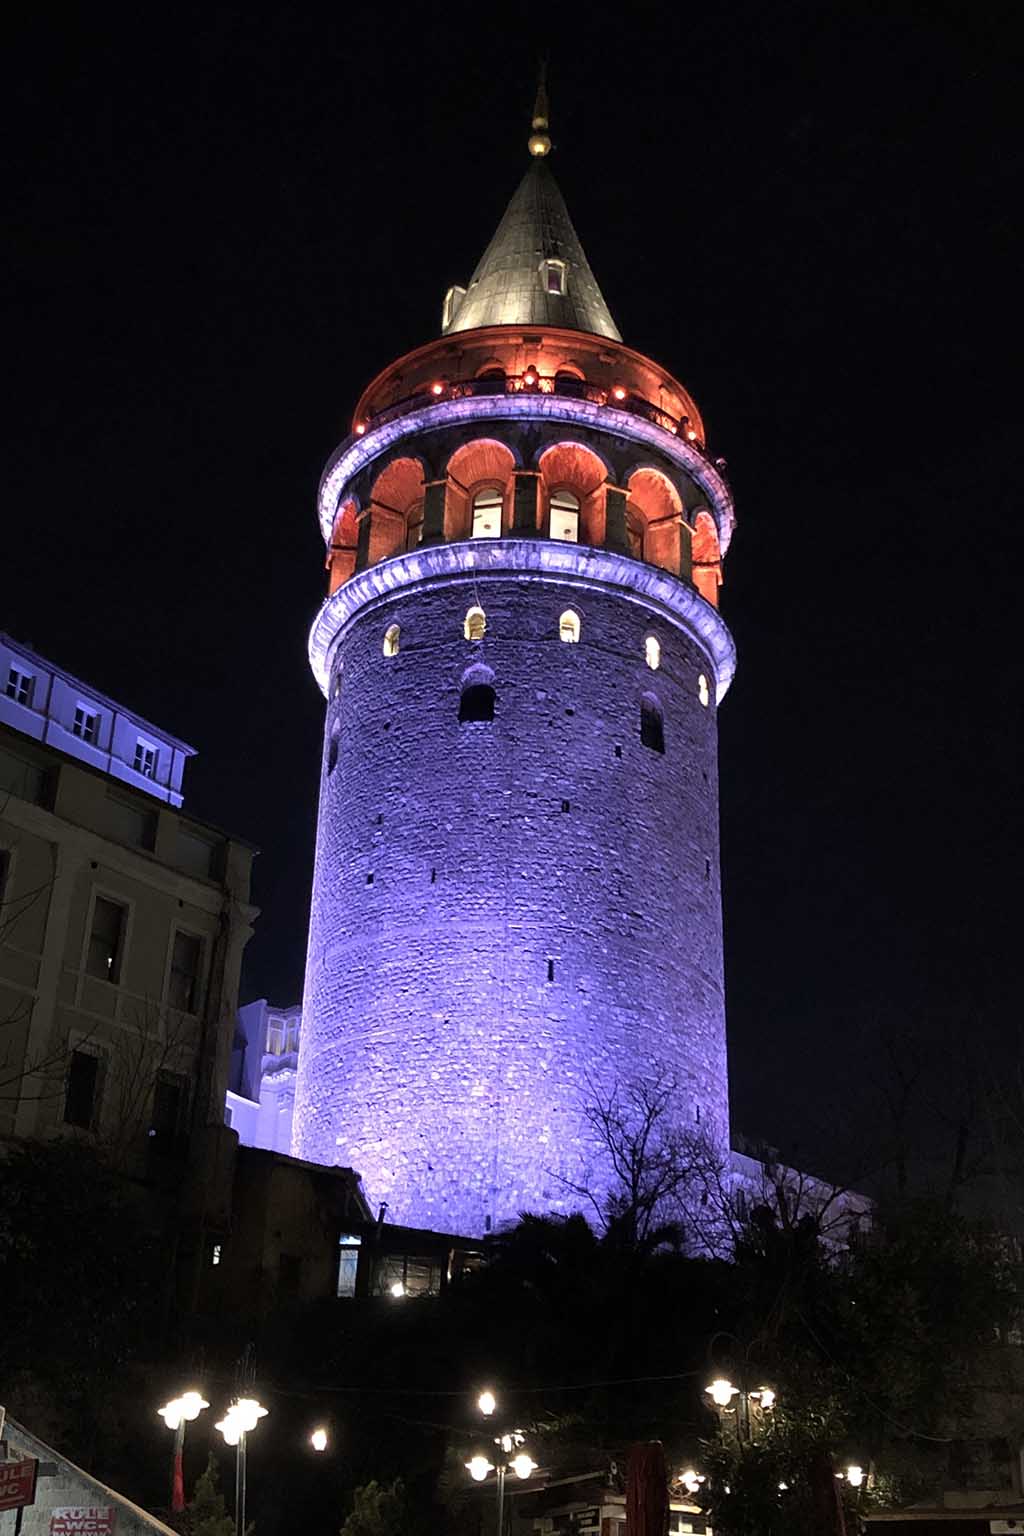 Галатская башня, Стамбул